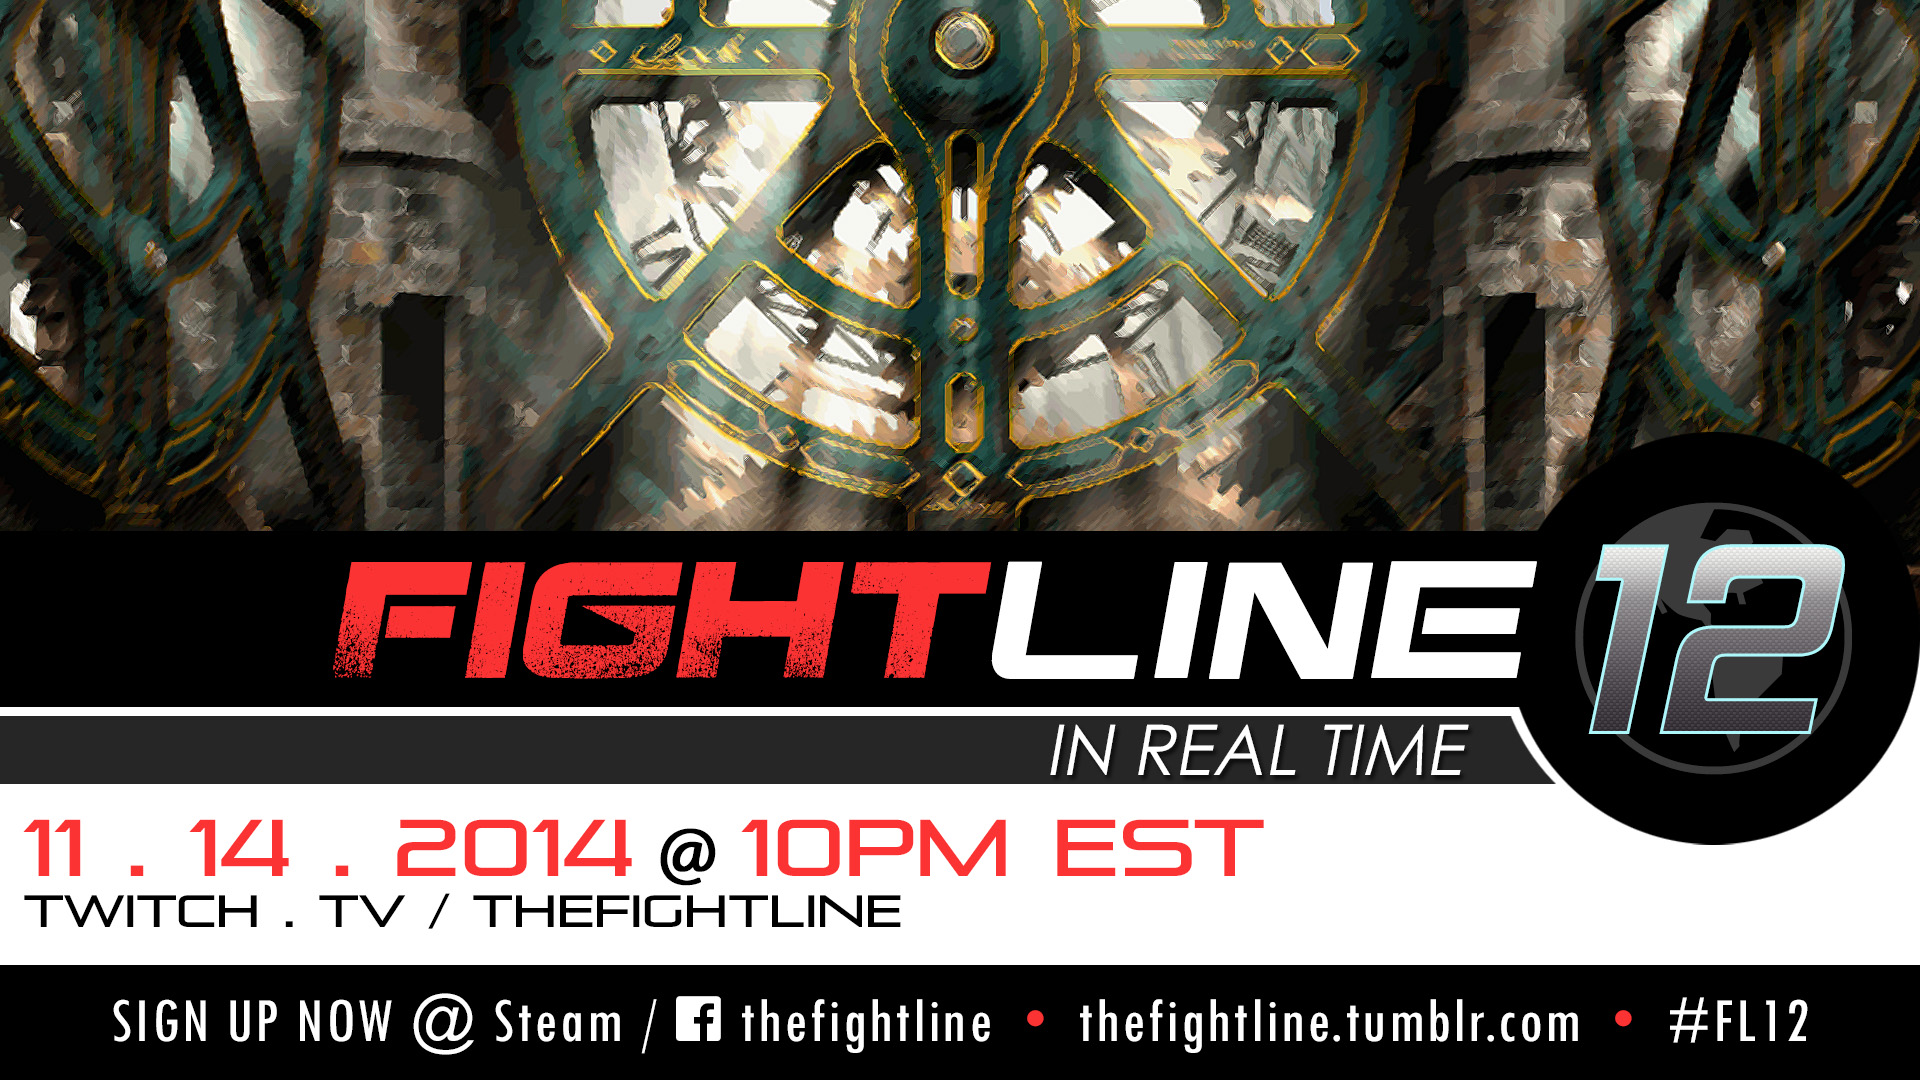 [IMAGE] Fightline 12 Promo